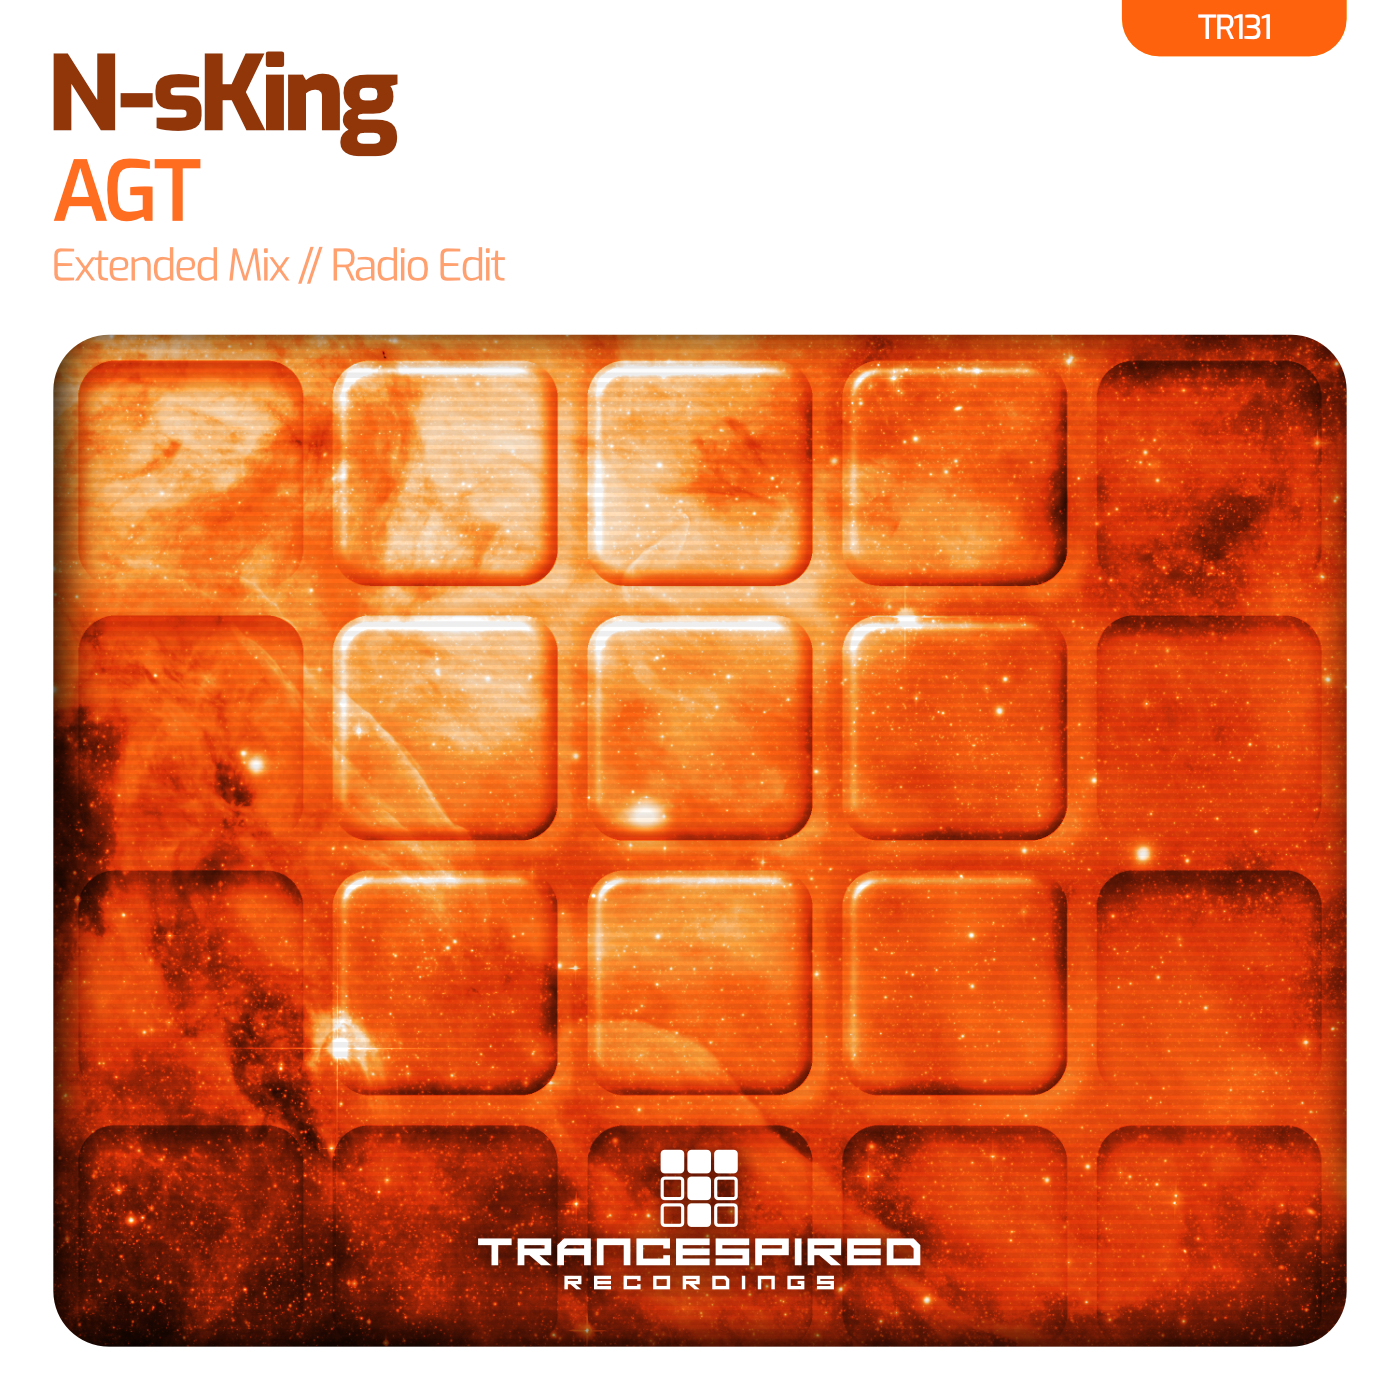 N-sKing presents AGT on Trancespired Recordings